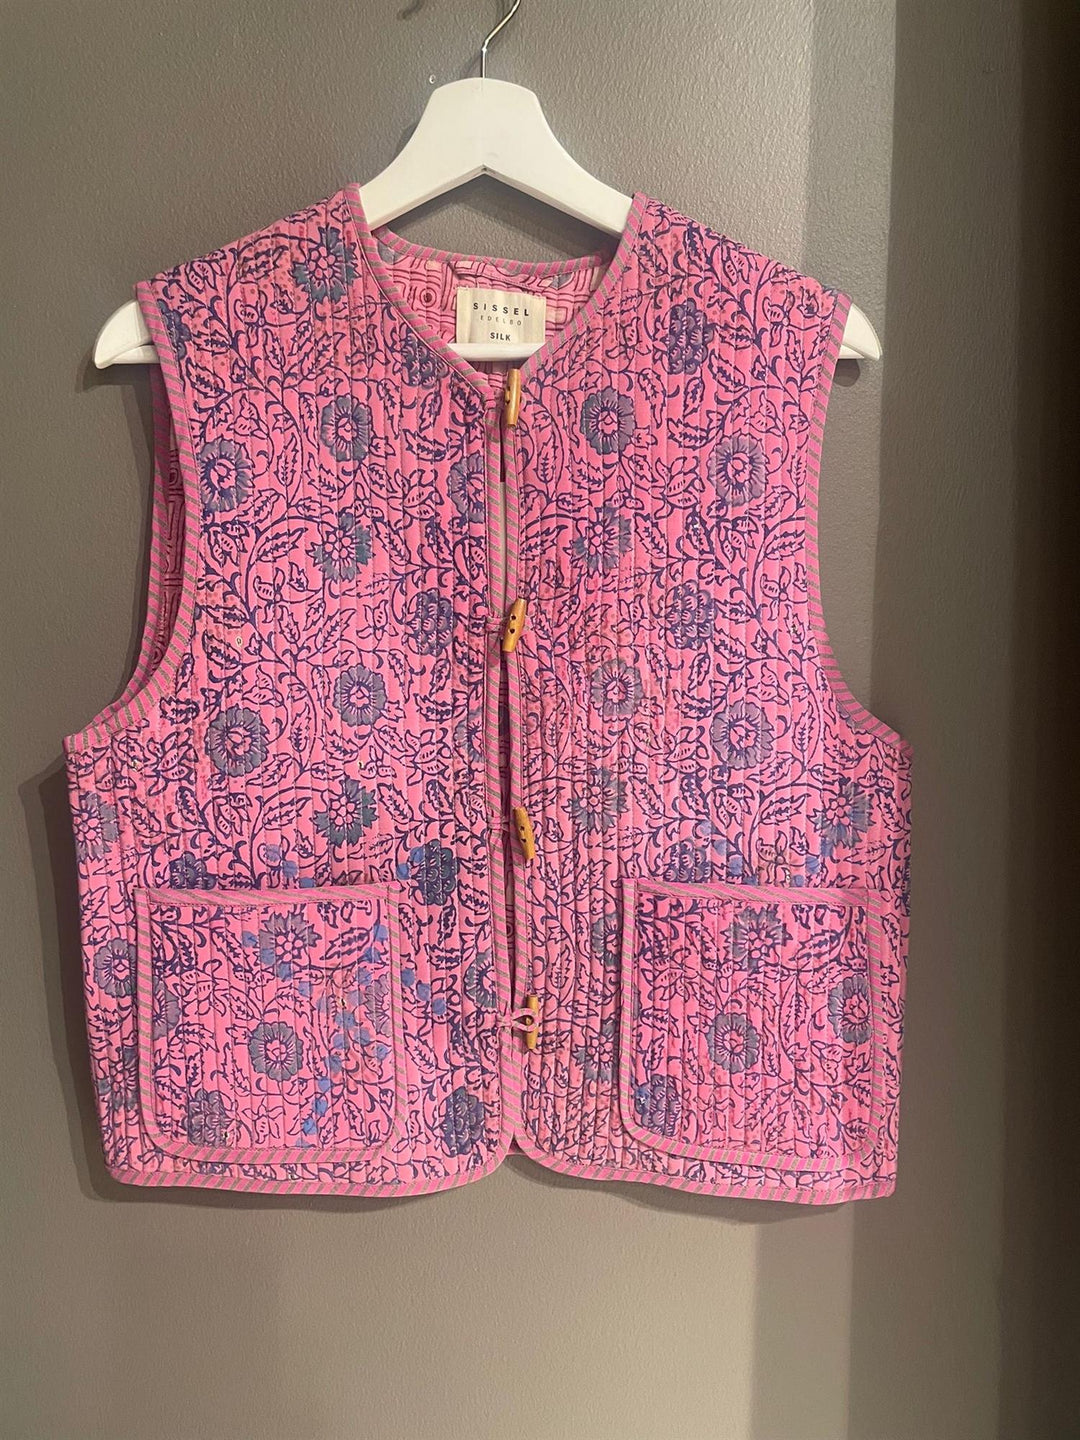 Amalie quiltet vest #27 lilla